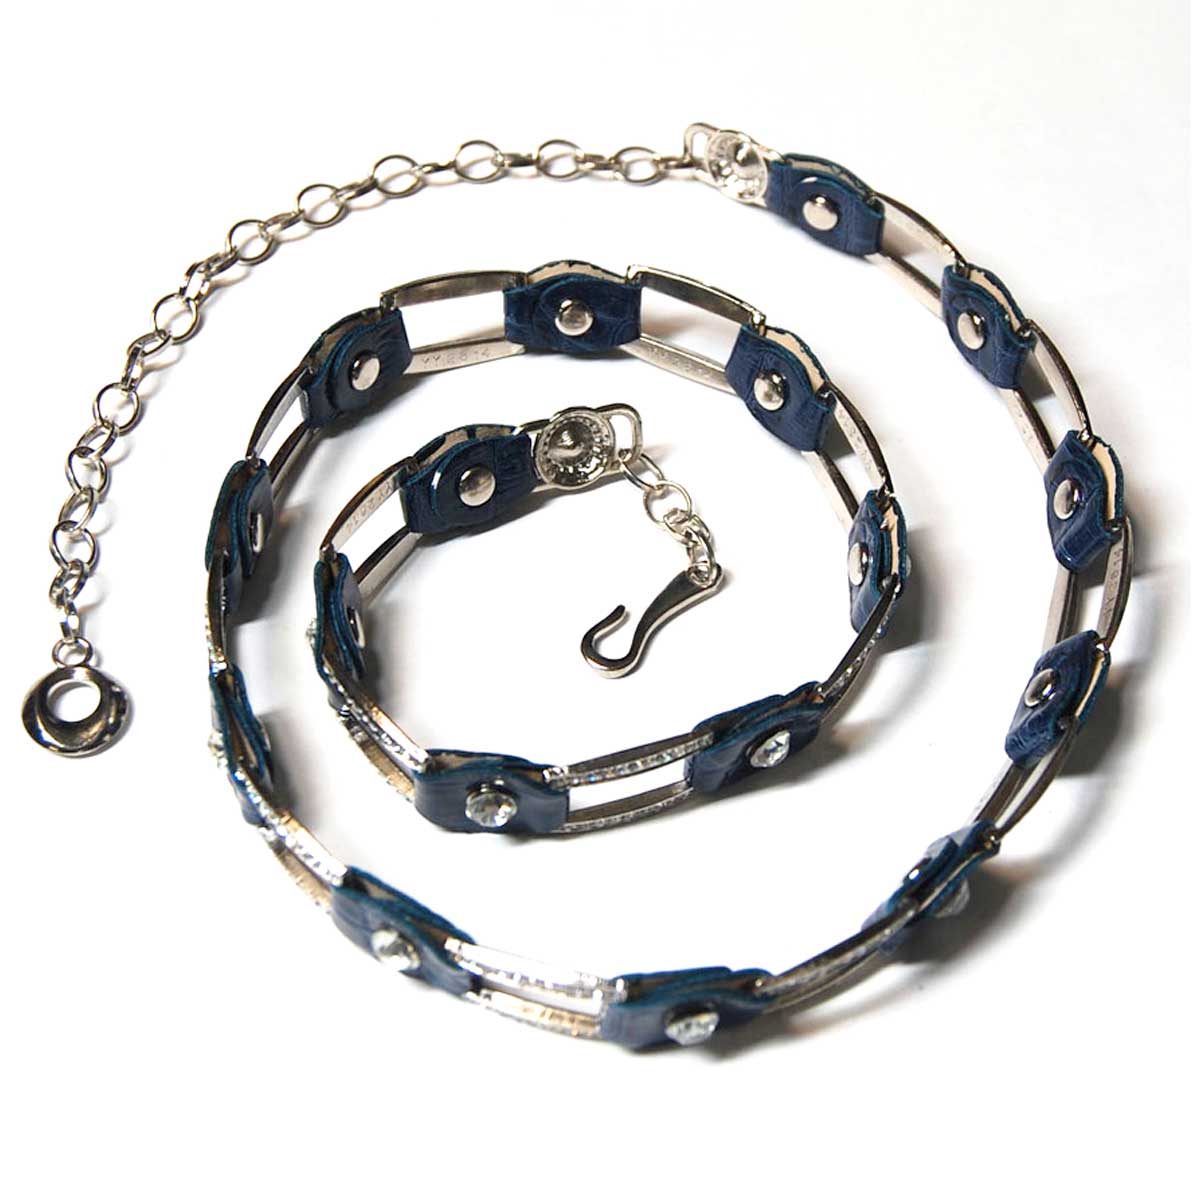 8709 Belts - Metal & Chain*